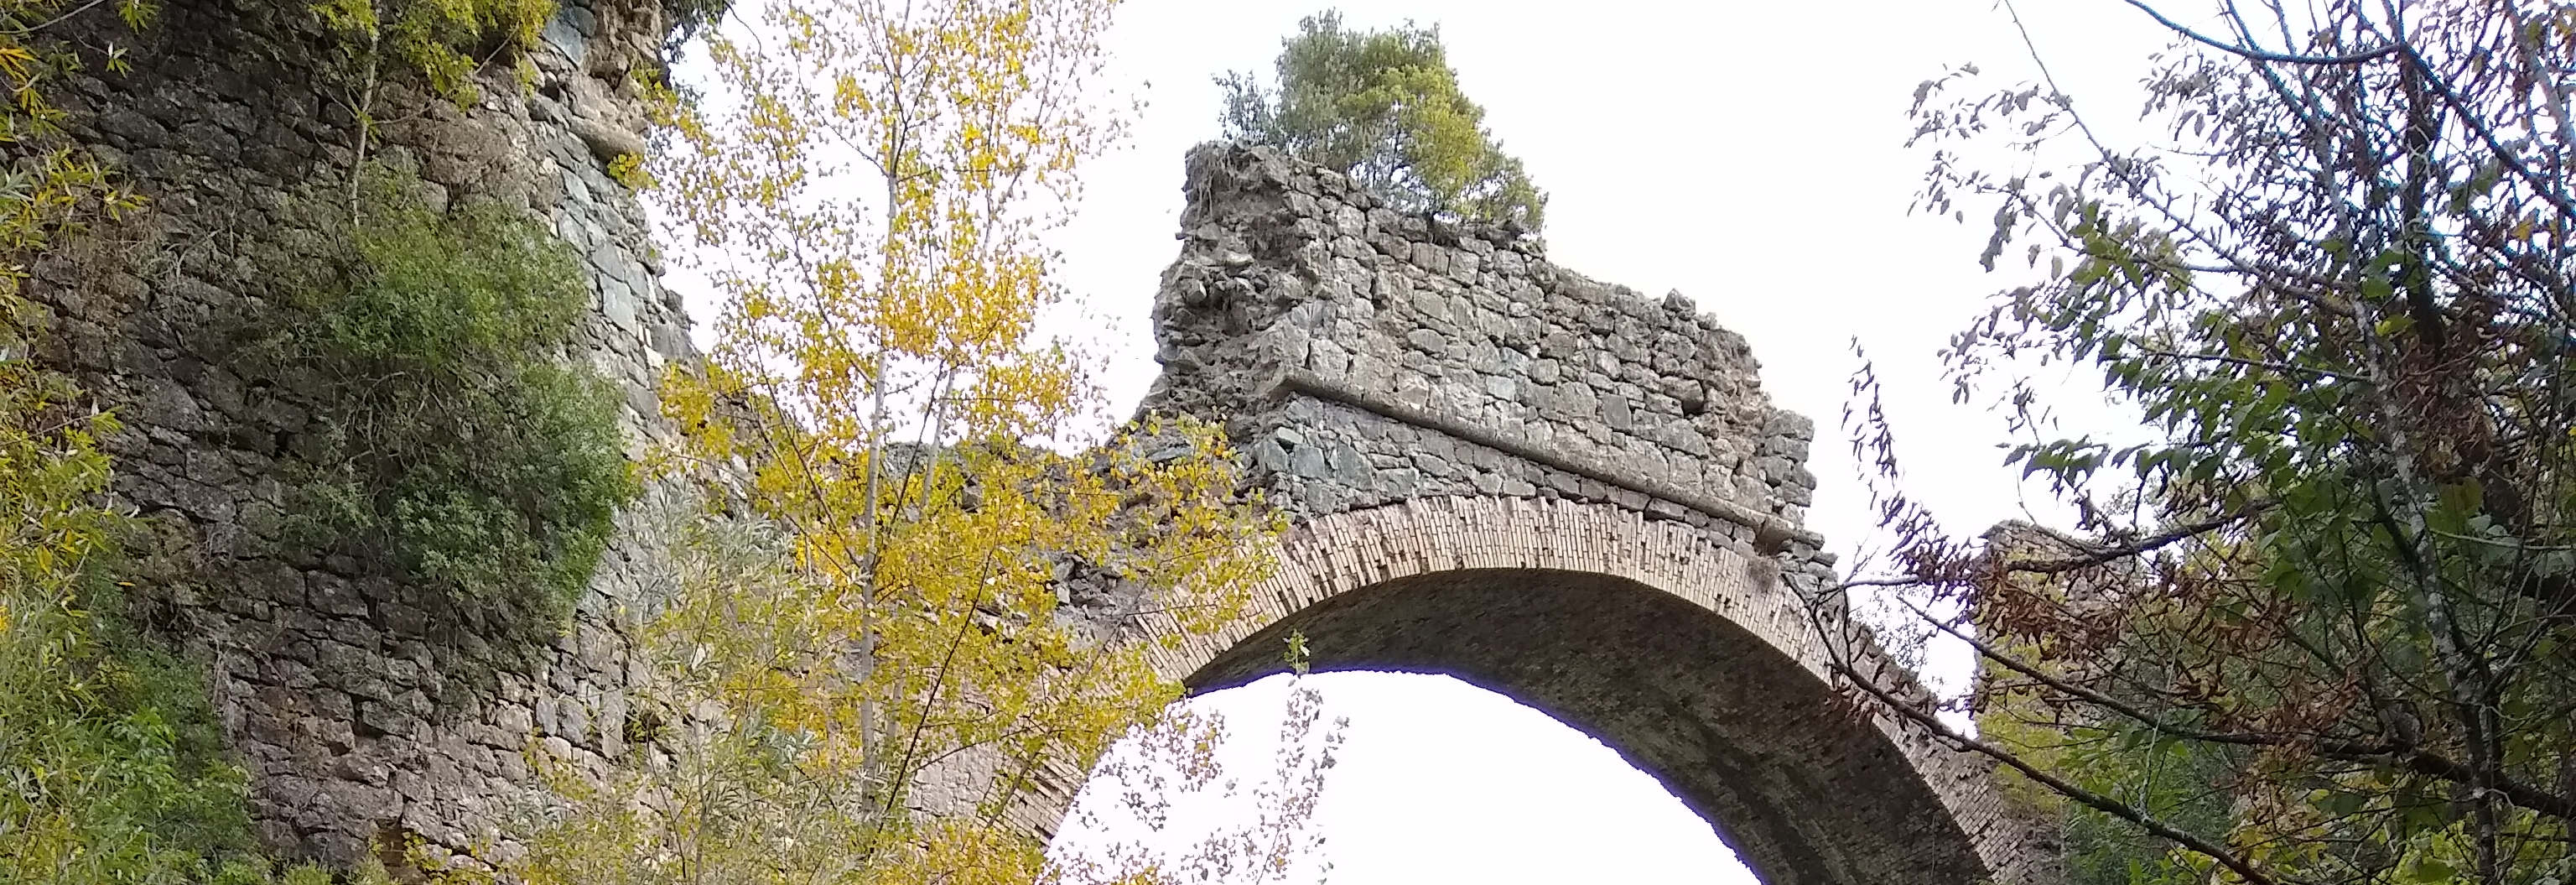 A ruined bridge